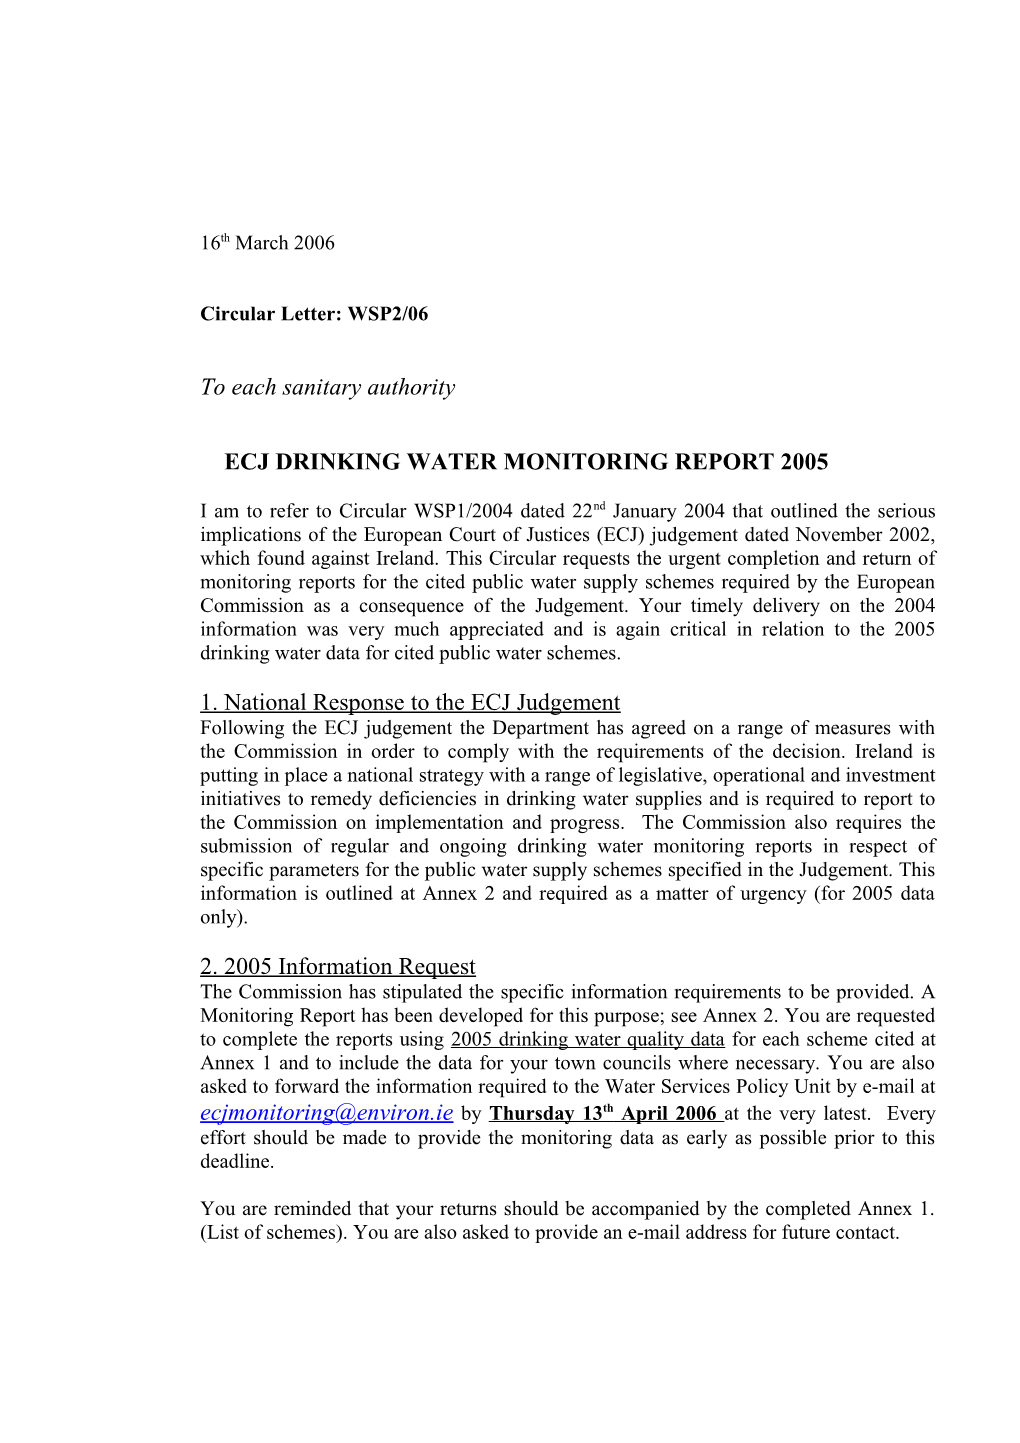 2006 Wsp2 - Ecj Drinking Water Monitoring Report 2005